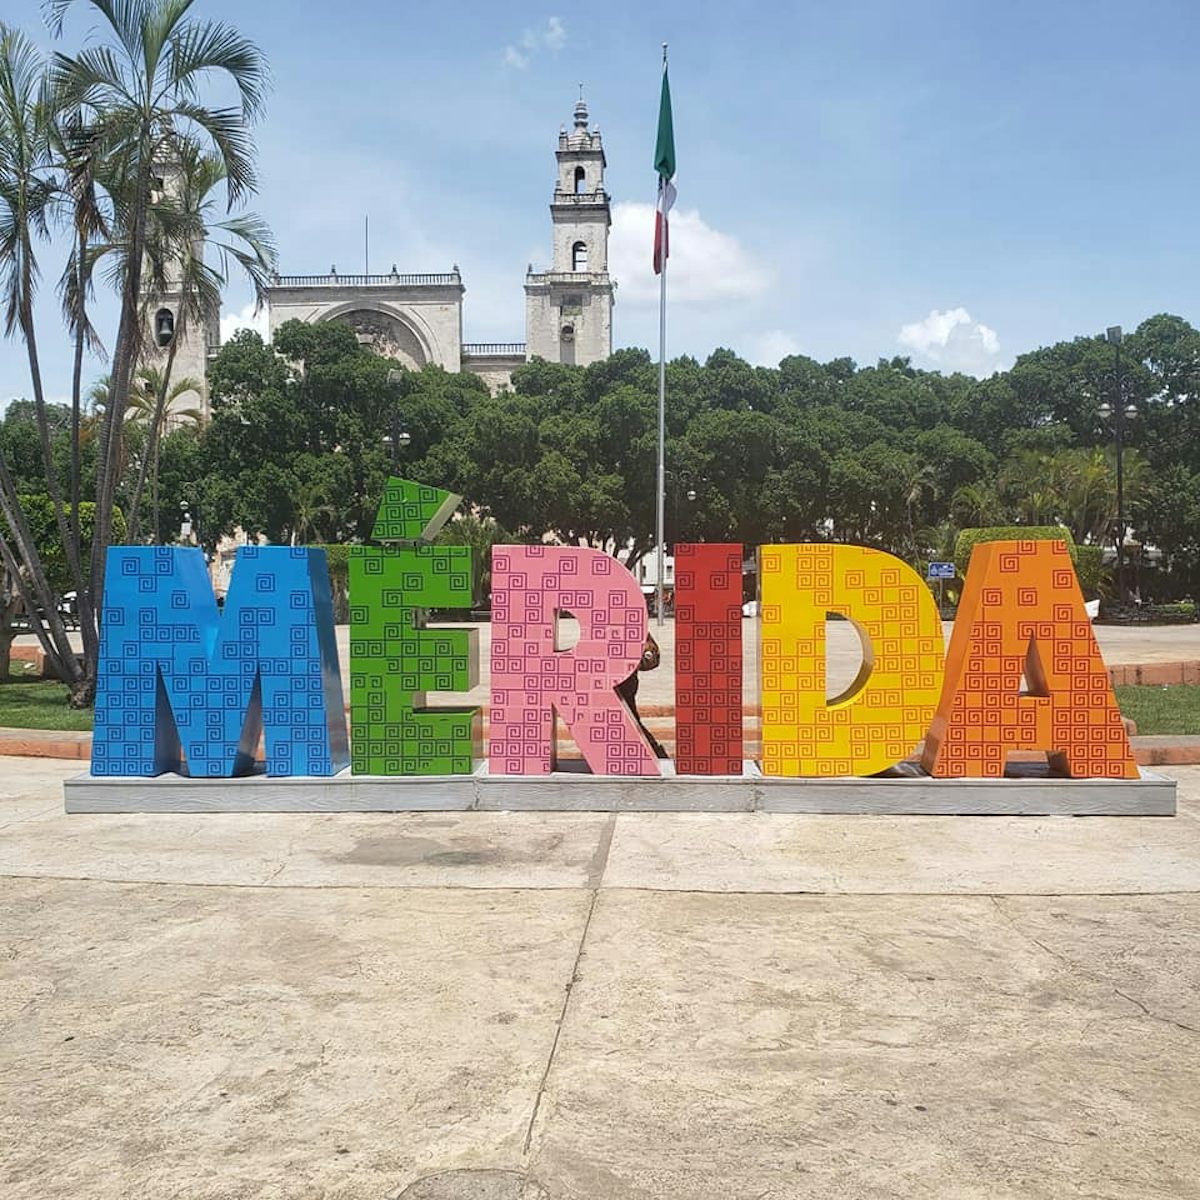 Merida City during excursion in Progreso